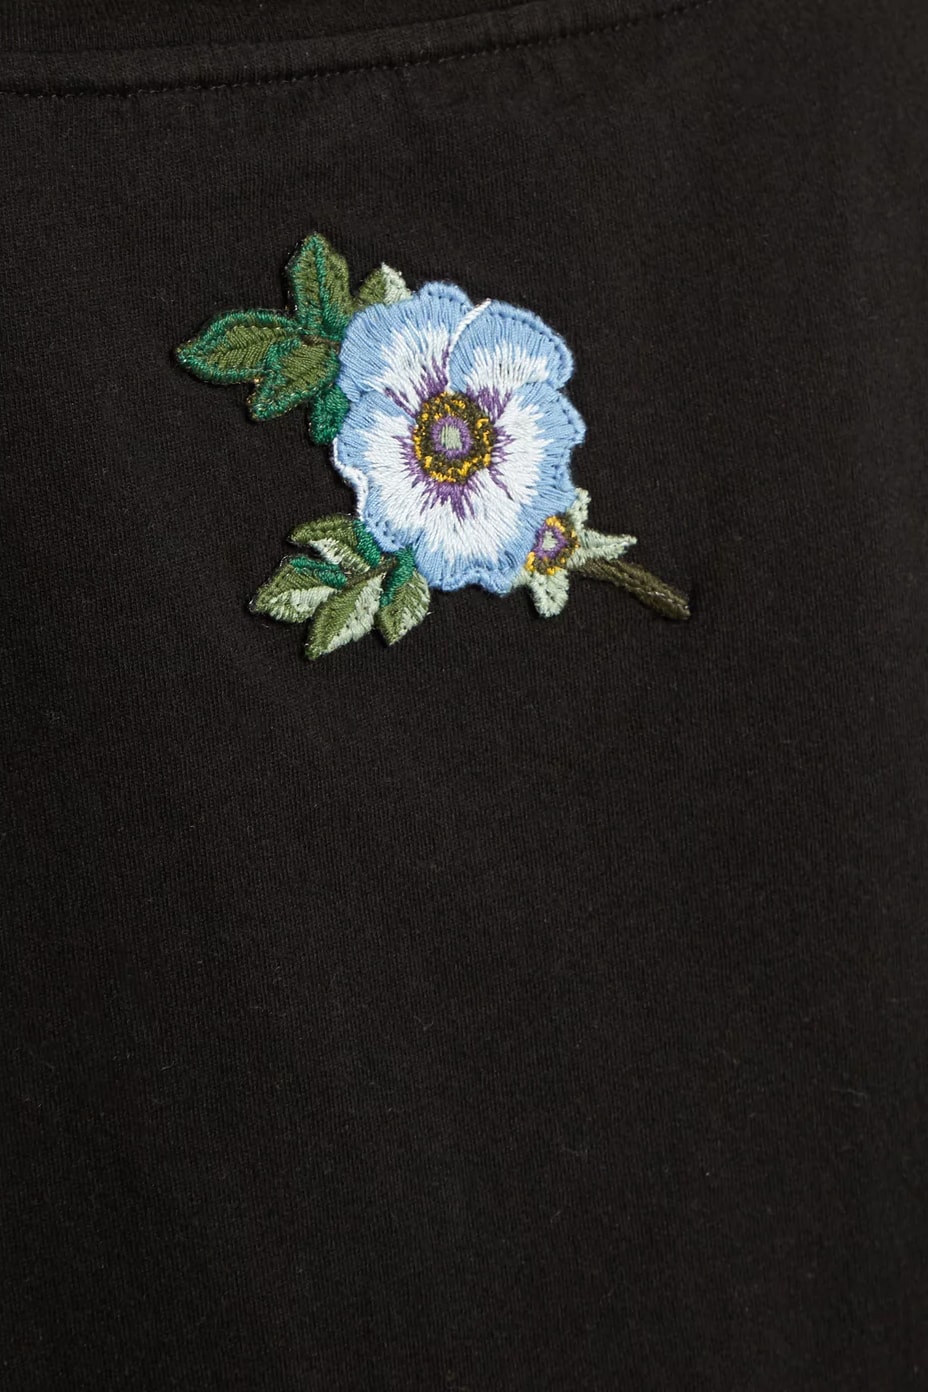 gucci restock matchesfashion black vintage logo tee zoom closeup floral embroidery flower applique detail